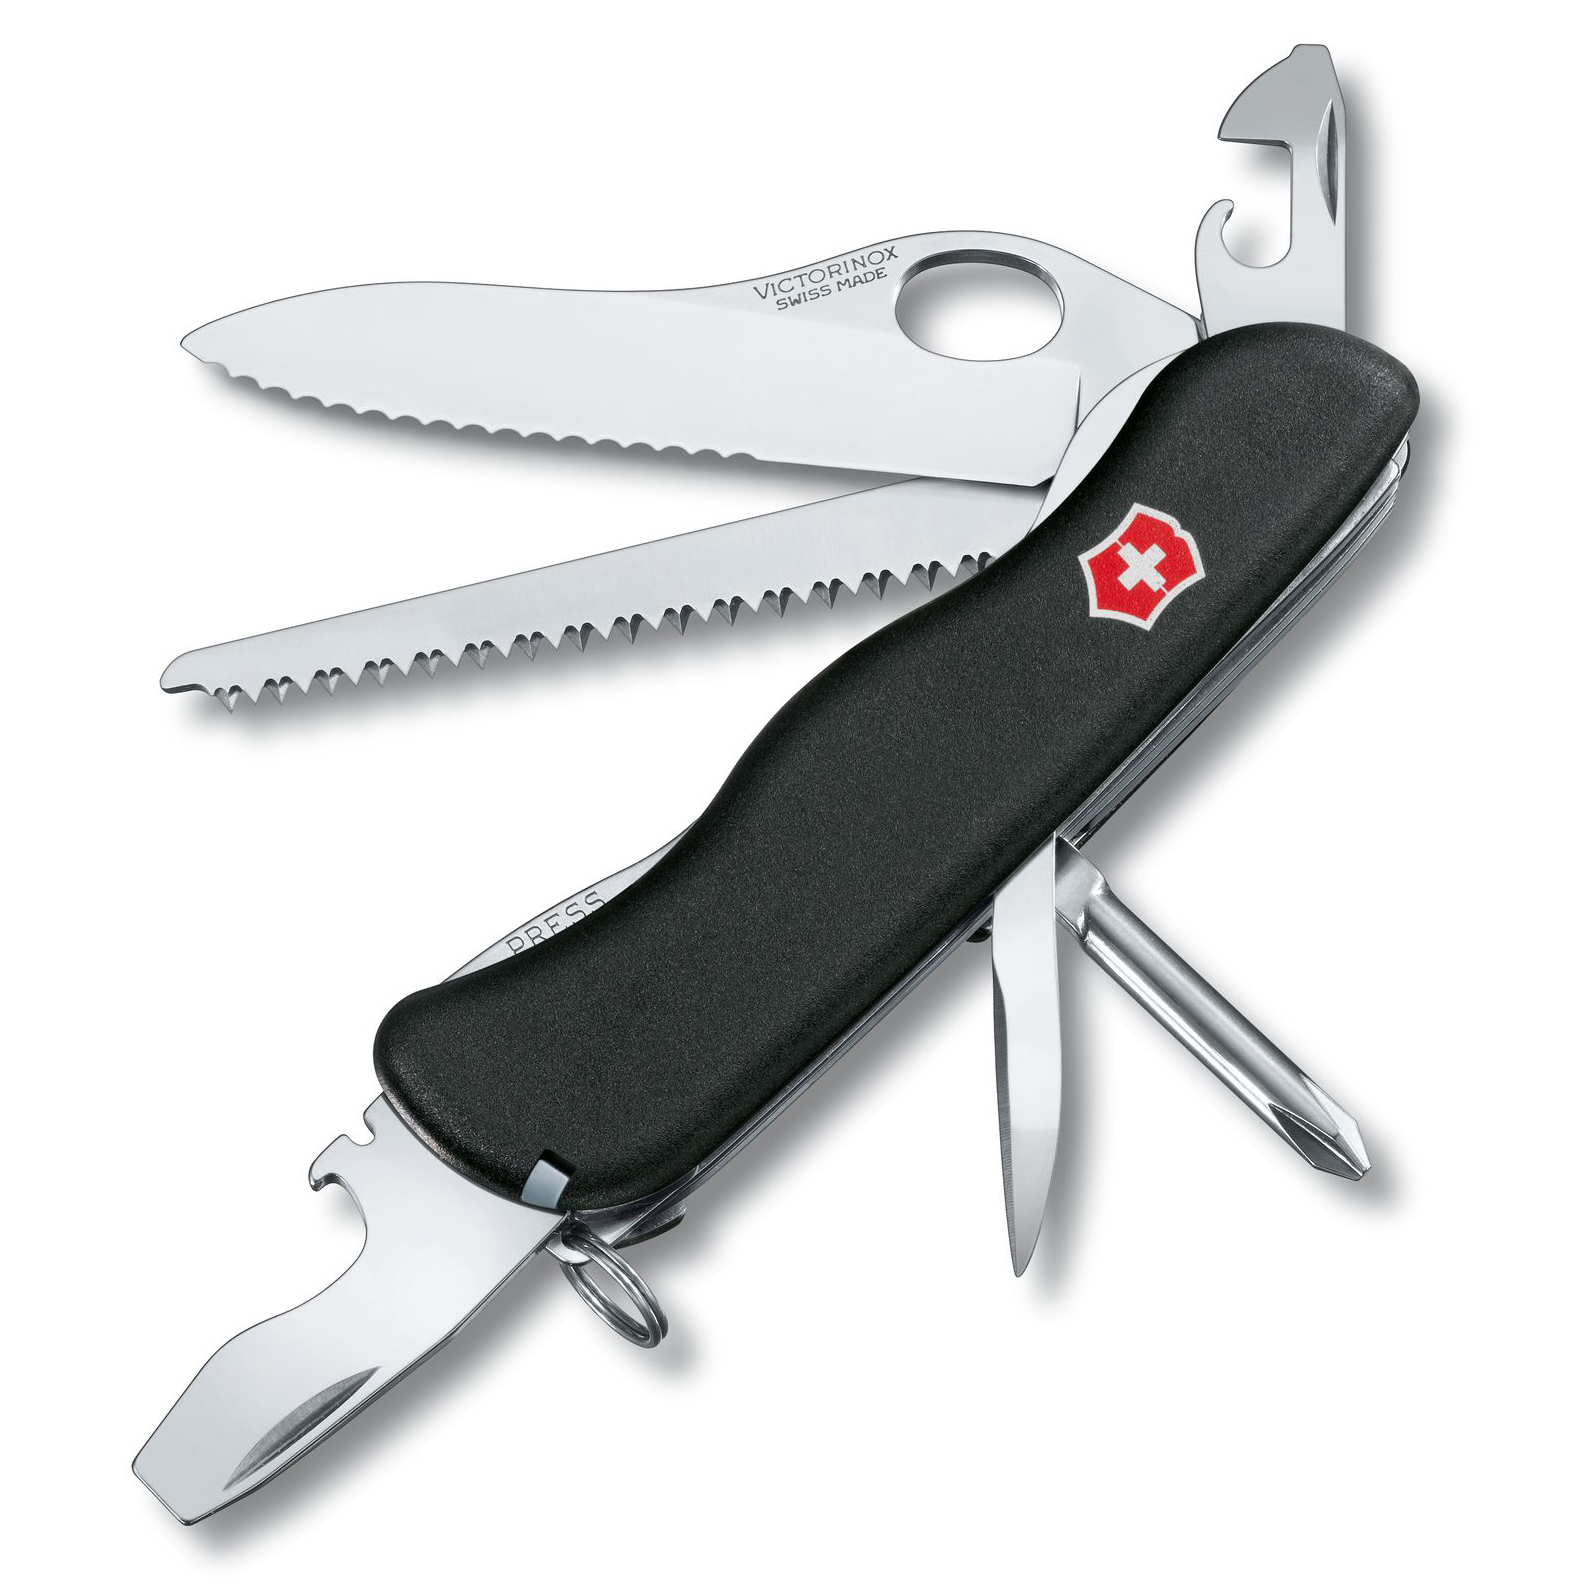 Нож перочинный Victorinox Trailmaster, сталь X50CrMoV15, рукоять нейлон, черный нож перочинный victorinox trailmaster 0 8461 mwc941 10 функций